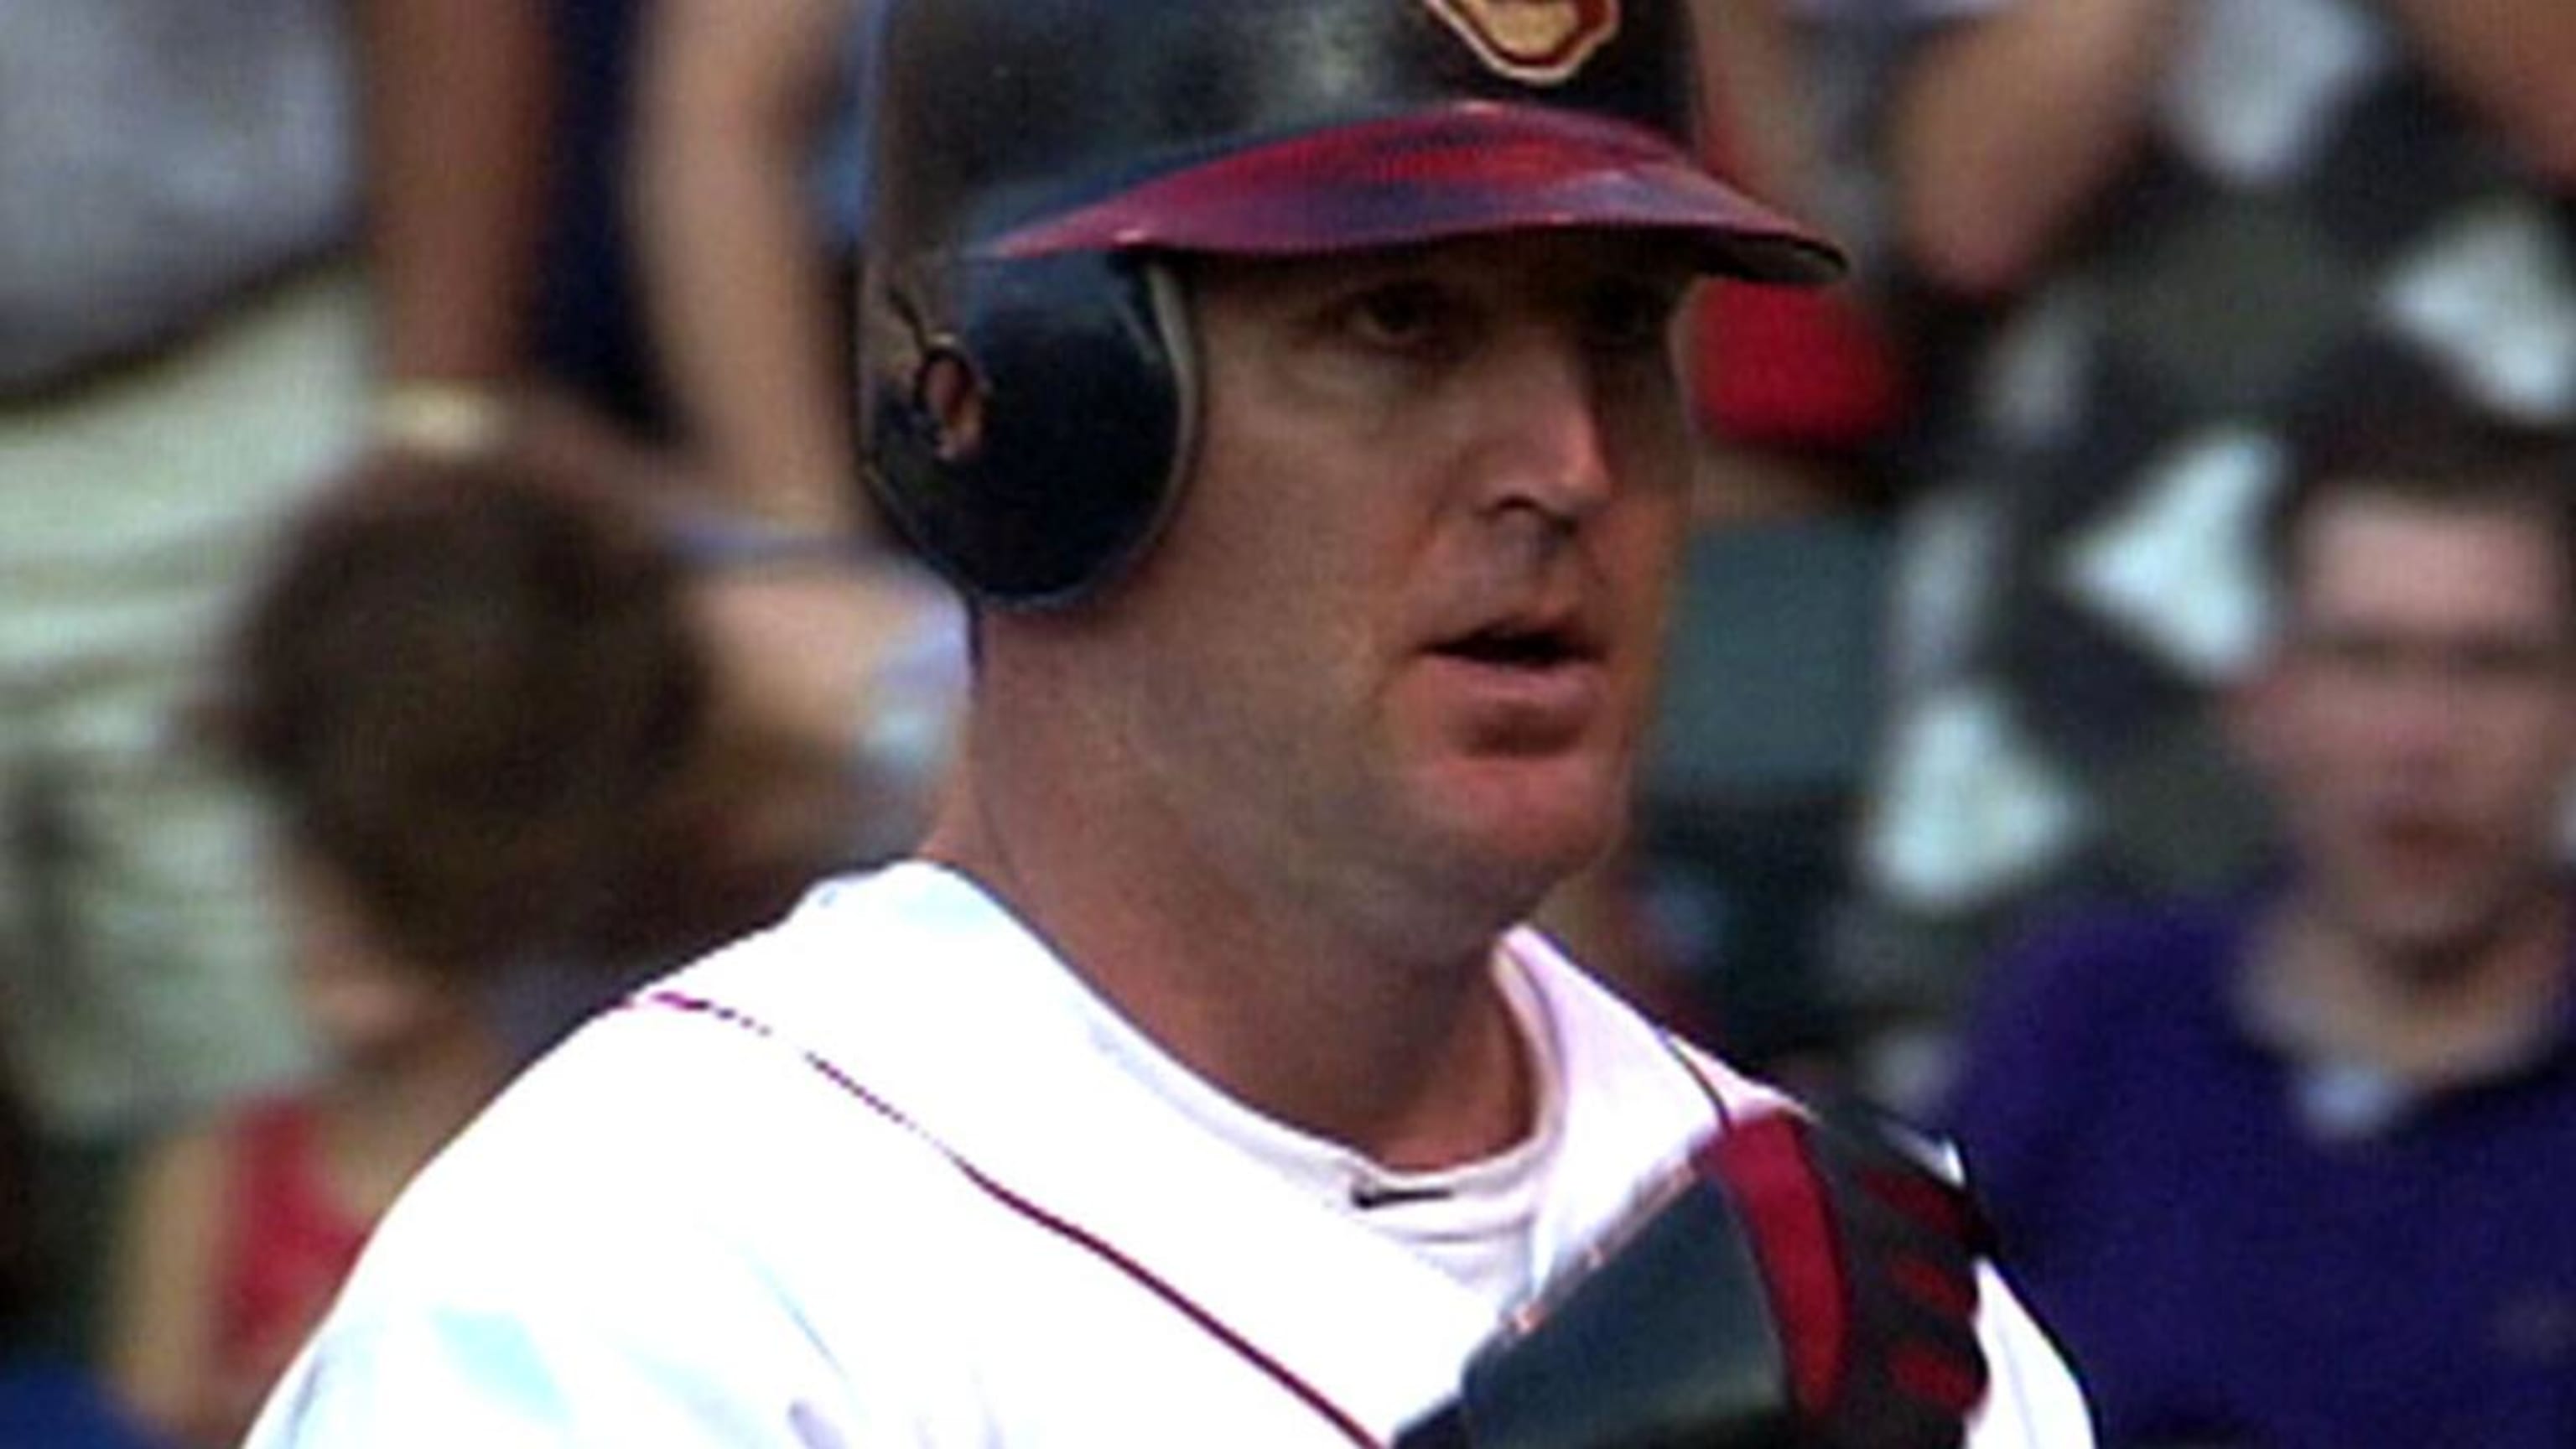 Jim Thome still close to baseball as new MLBPAA president